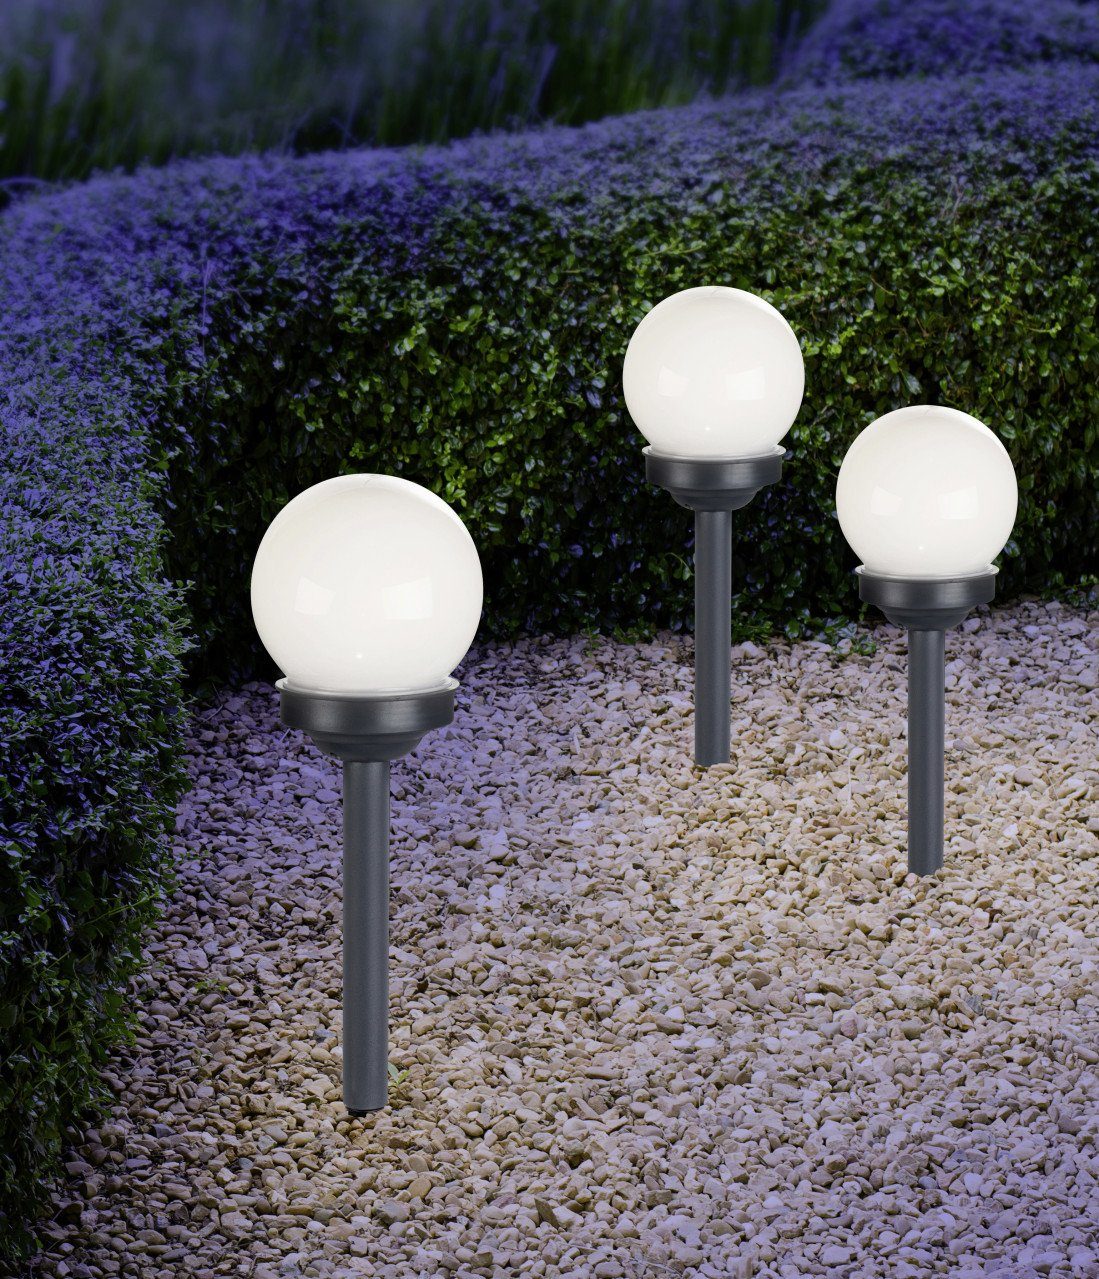 x 10 35 Außen-Stehlampe LED Globo cm, Globo Solarleuchte Bewegungsmelder grau LED, Ohne